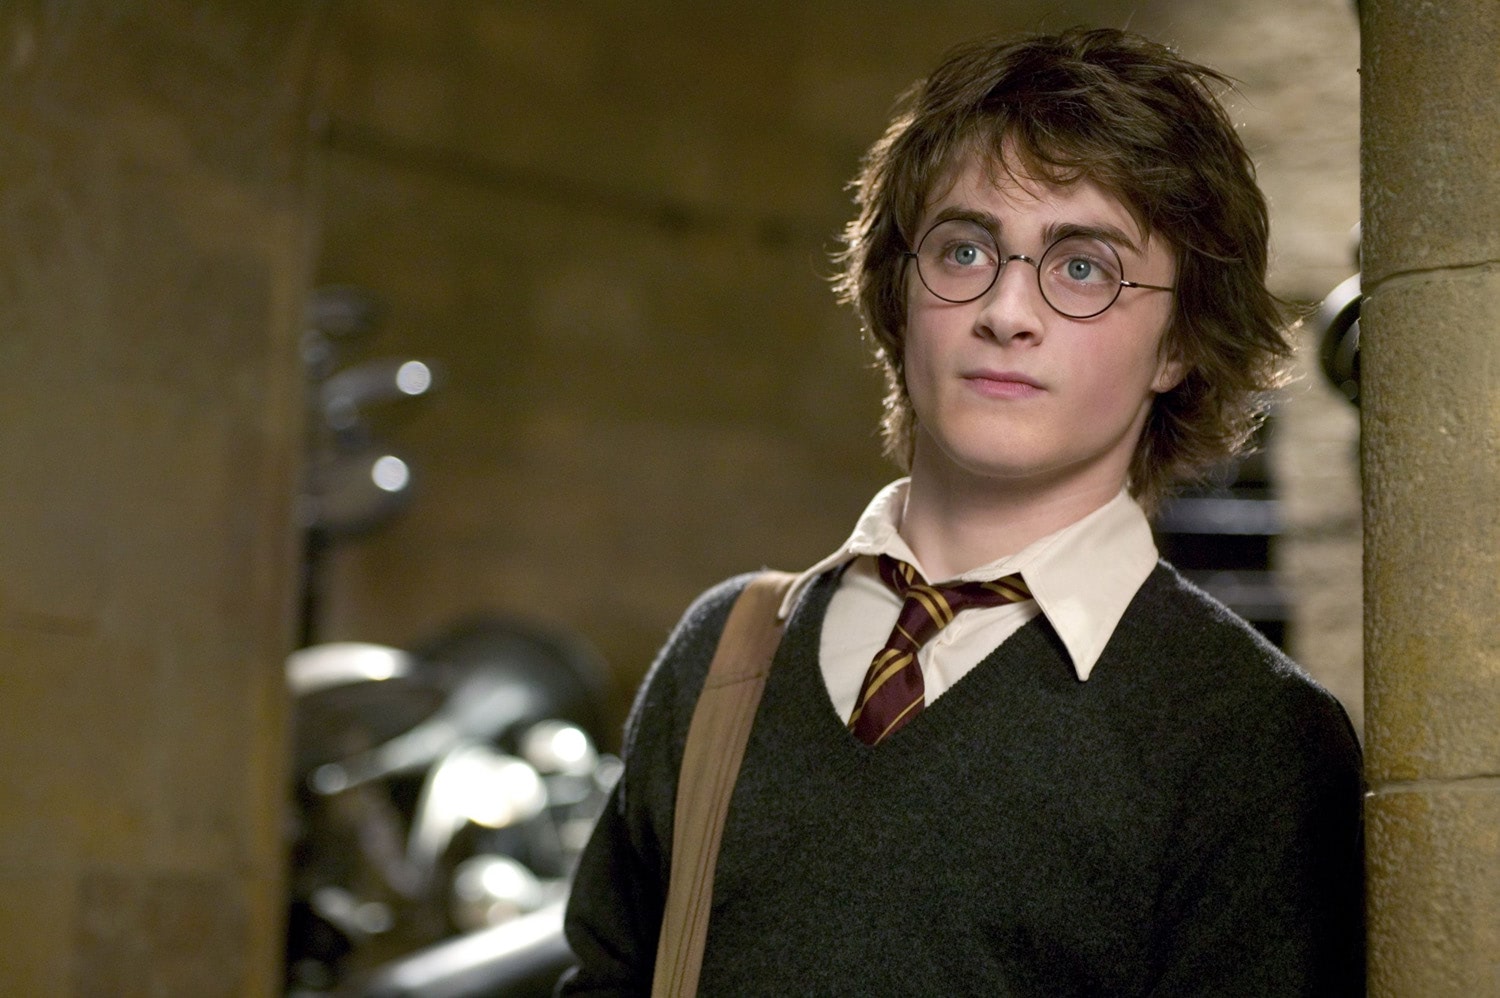 Harry at Hogwarts